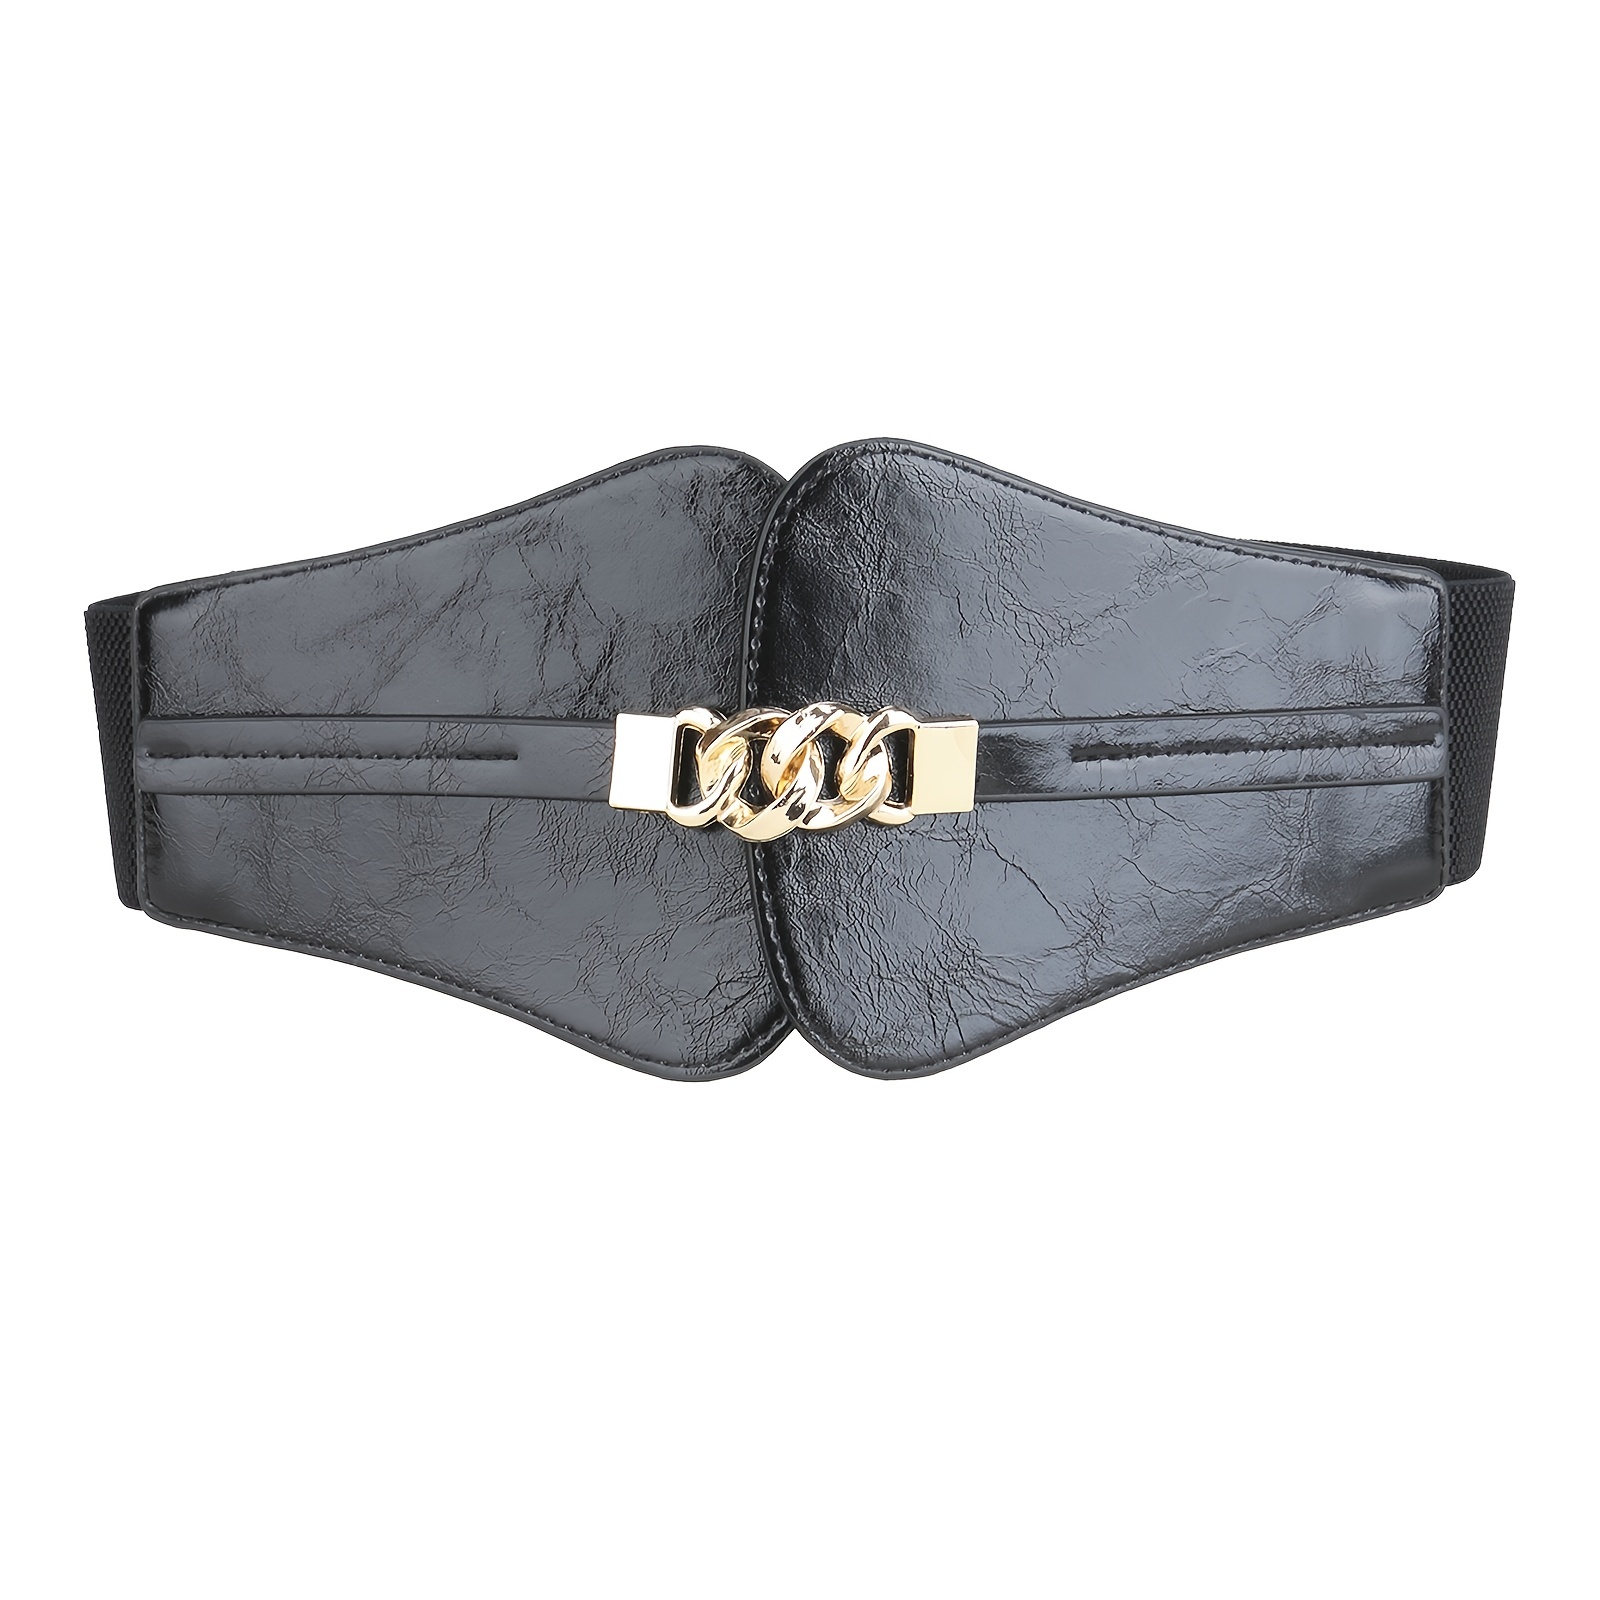 Wide Women Waist Belt Stretchy Cinch Belt Leather Elastic Belt For